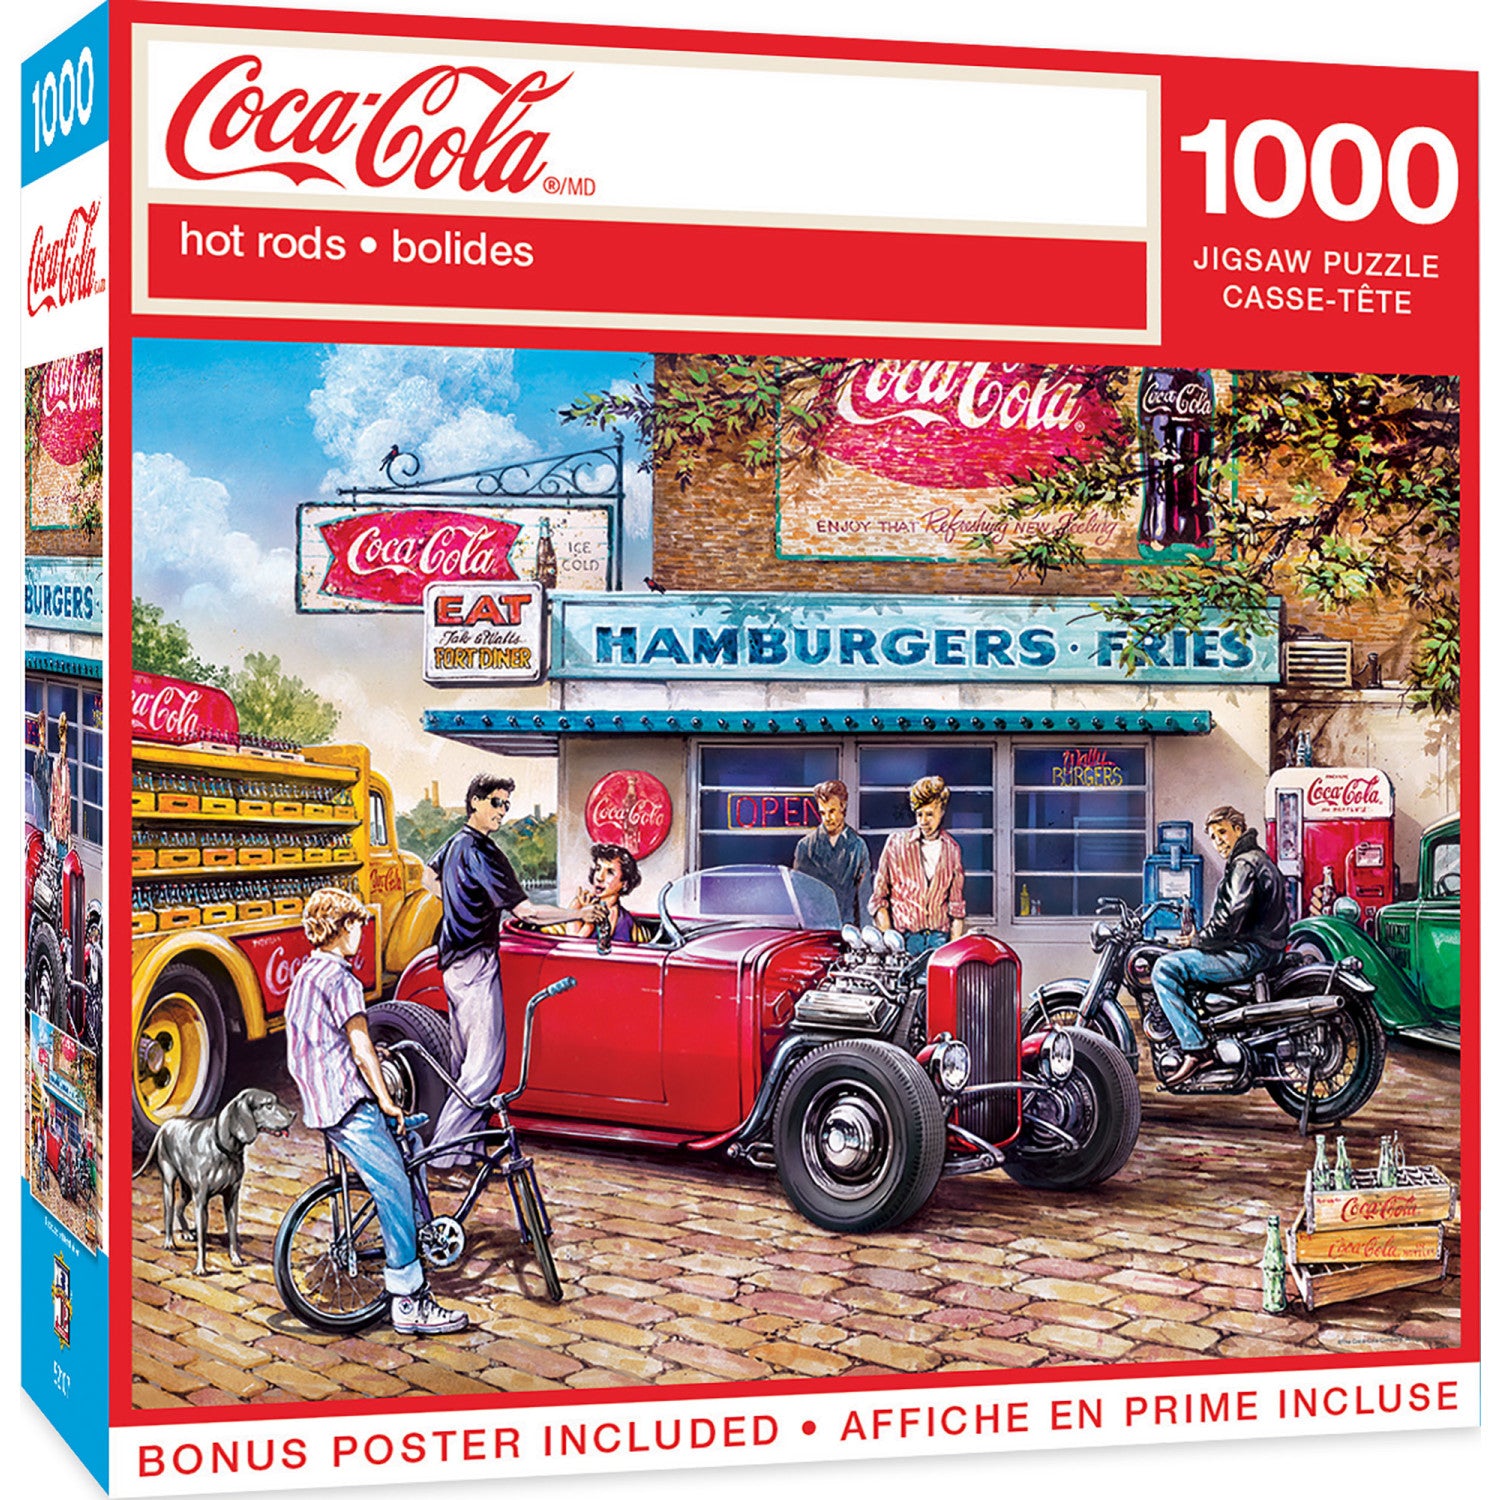 Coca-Cola - Hot Rods 1000 Piece Jigsaw Puzzle